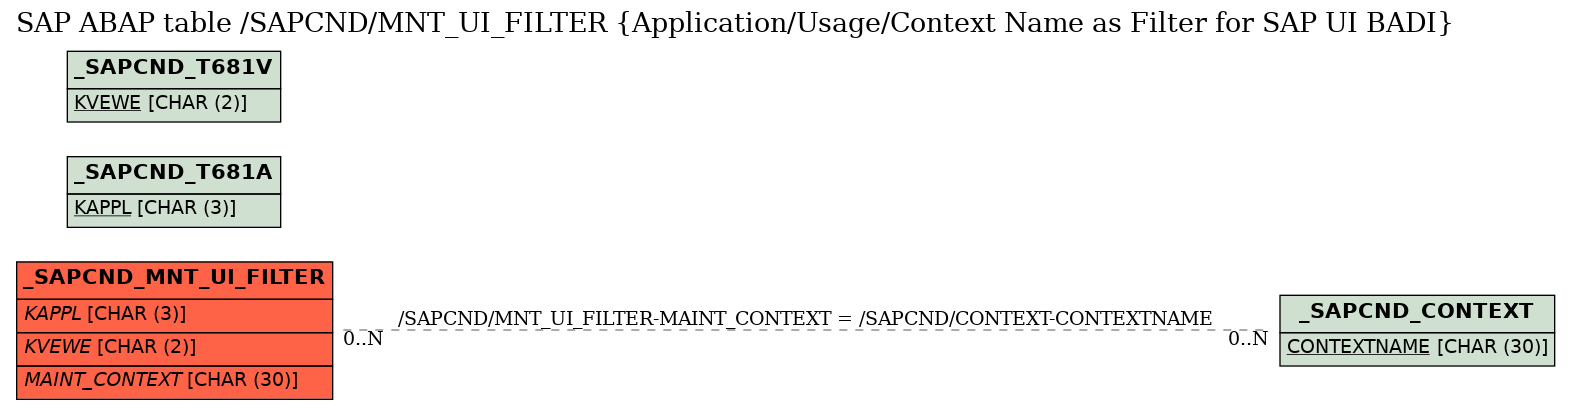 E-R Diagram for table /SAPCND/MNT_UI_FILTER (Application/Usage/Context Name as Filter for SAP UI BADI)